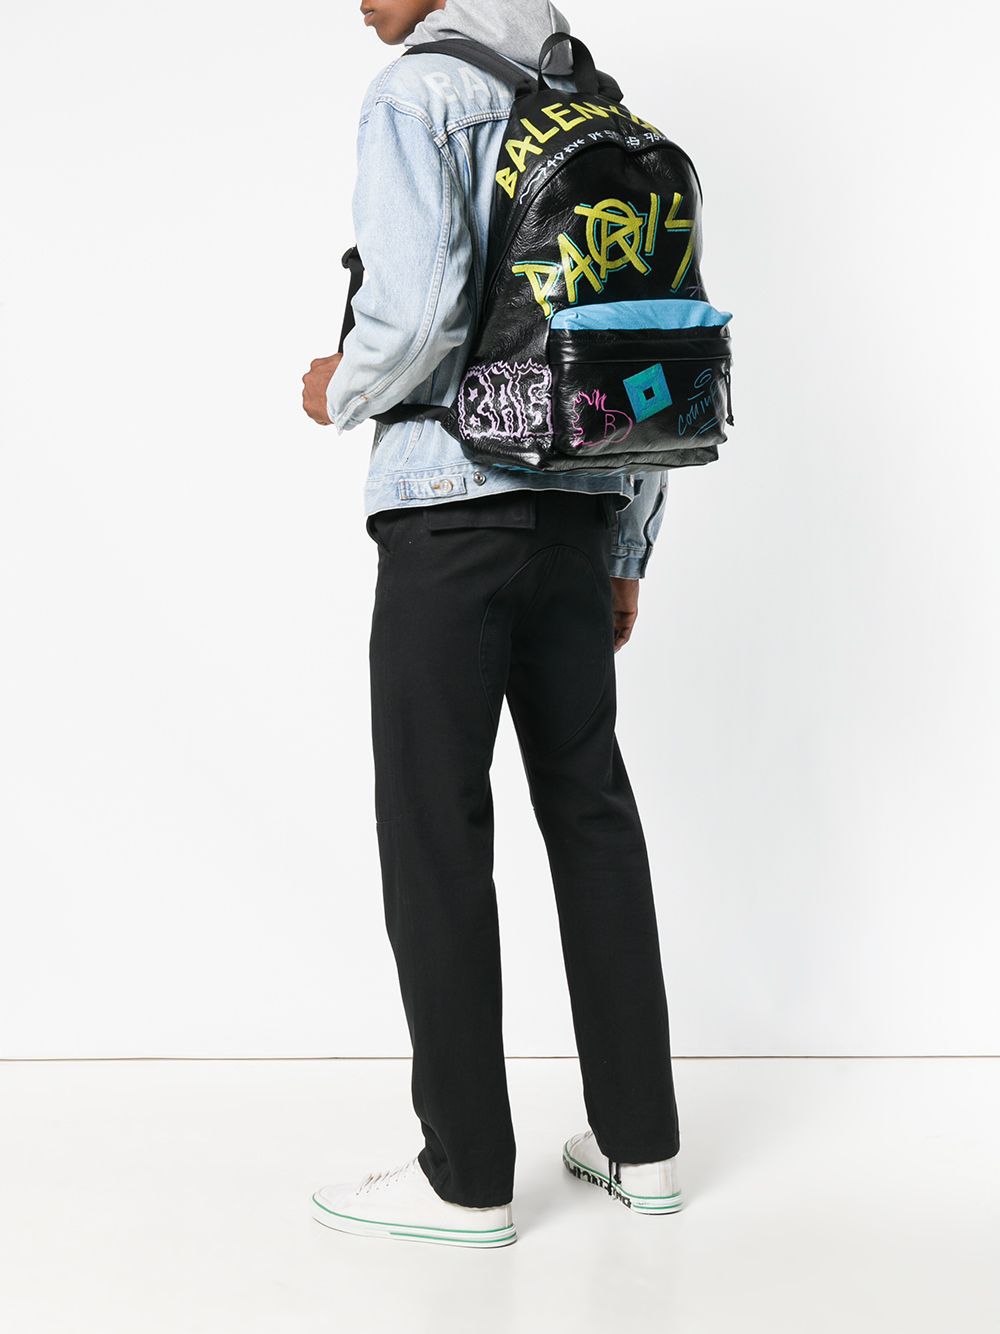 фото Balenciaga рюкзак с принтом граффити